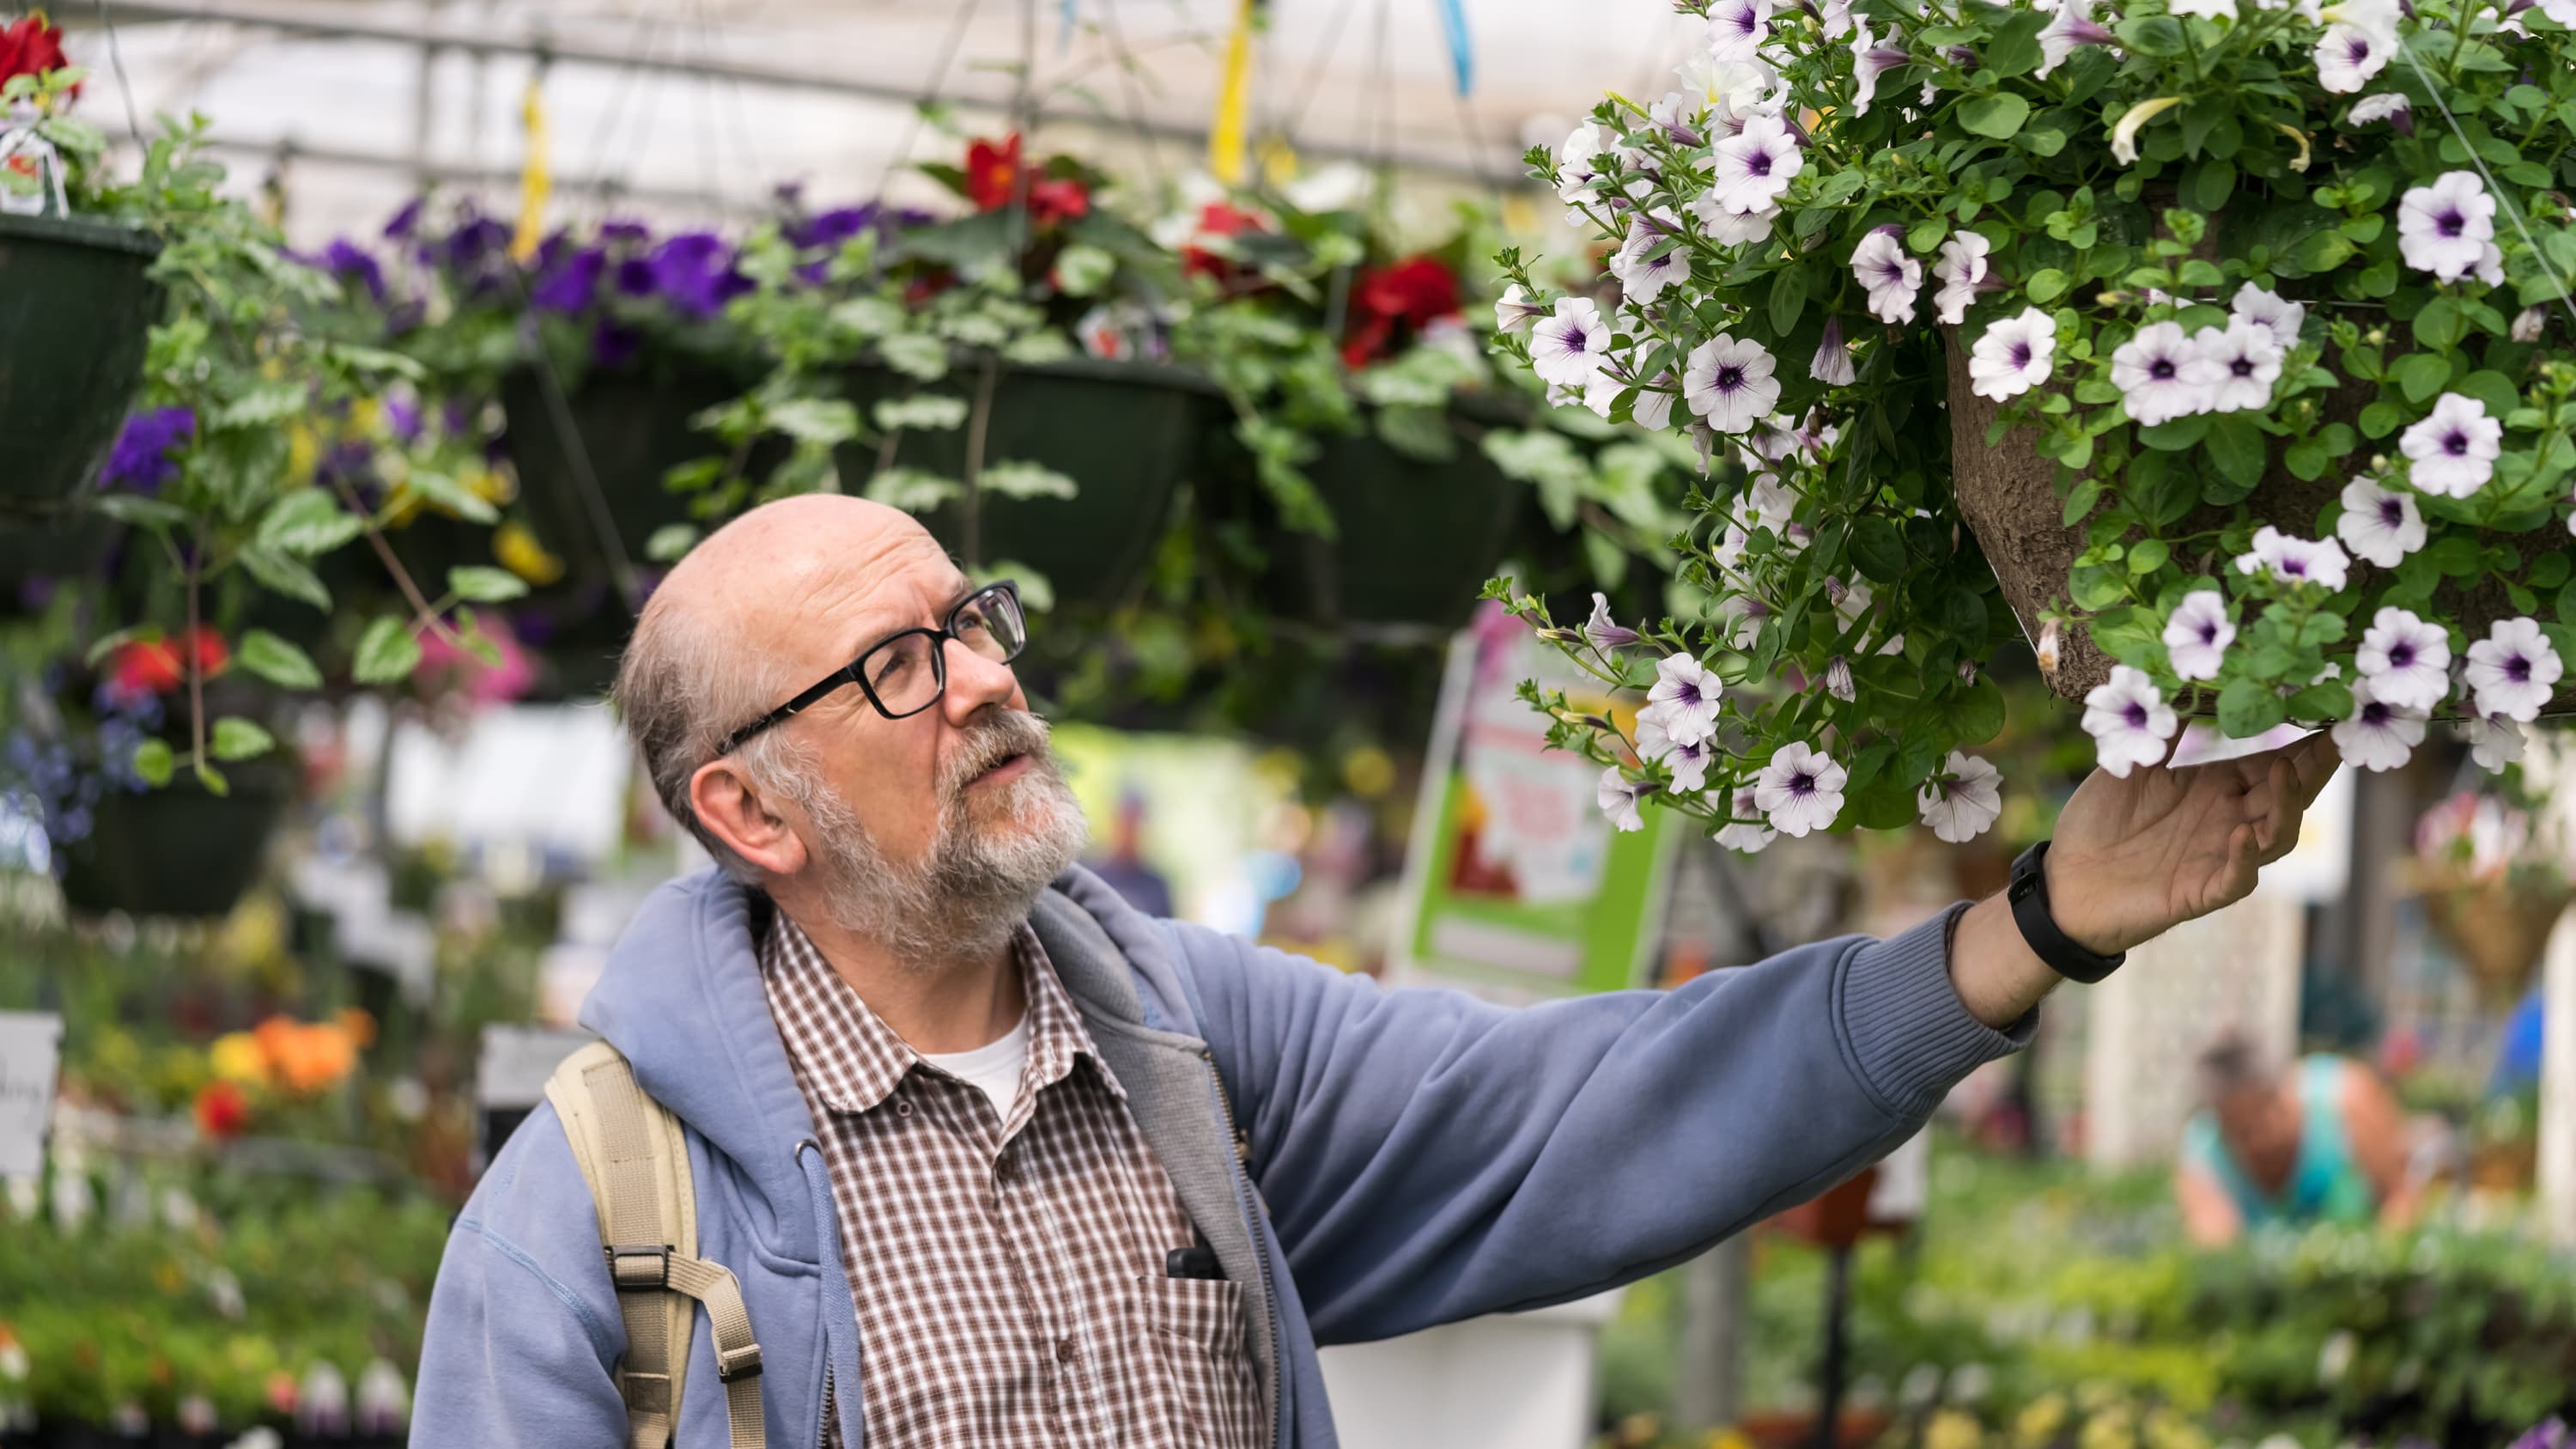 A man who may have had bladder cancer enjoys a garden walk.